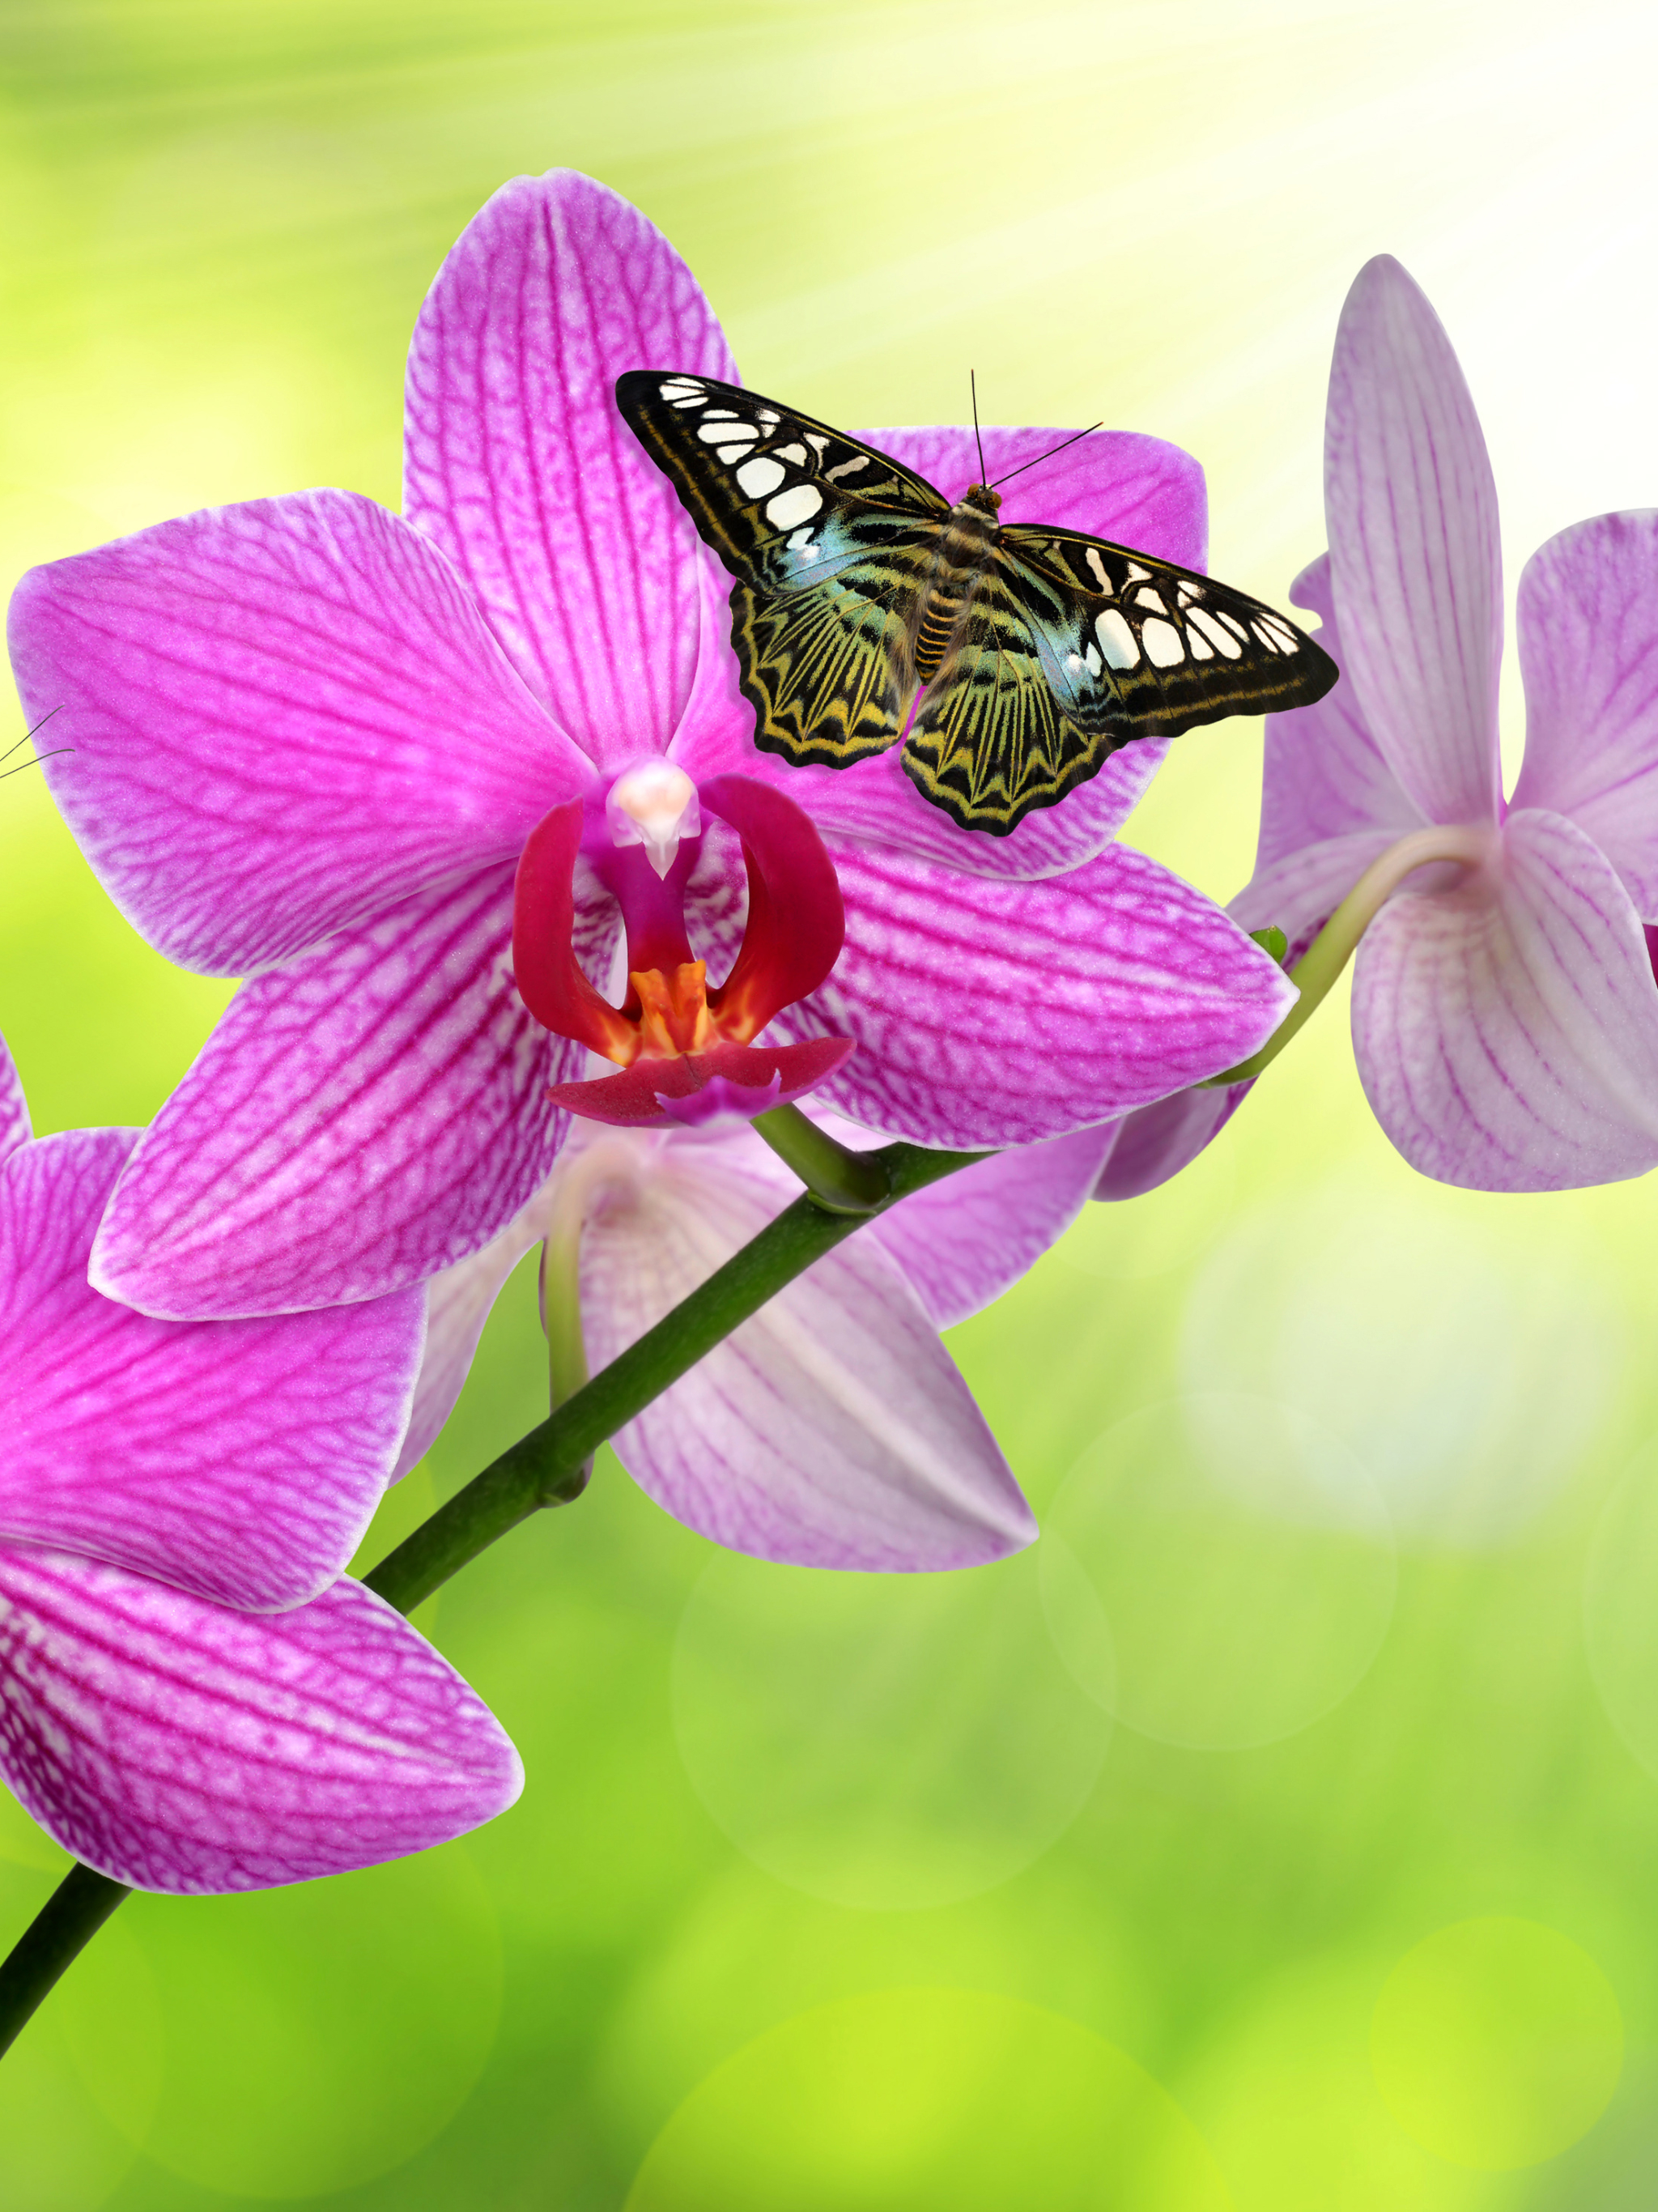 Handy-Wallpaper Tiere, Schmetterlinge, Blume, Orchidee, Pinke Blume kostenlos herunterladen.